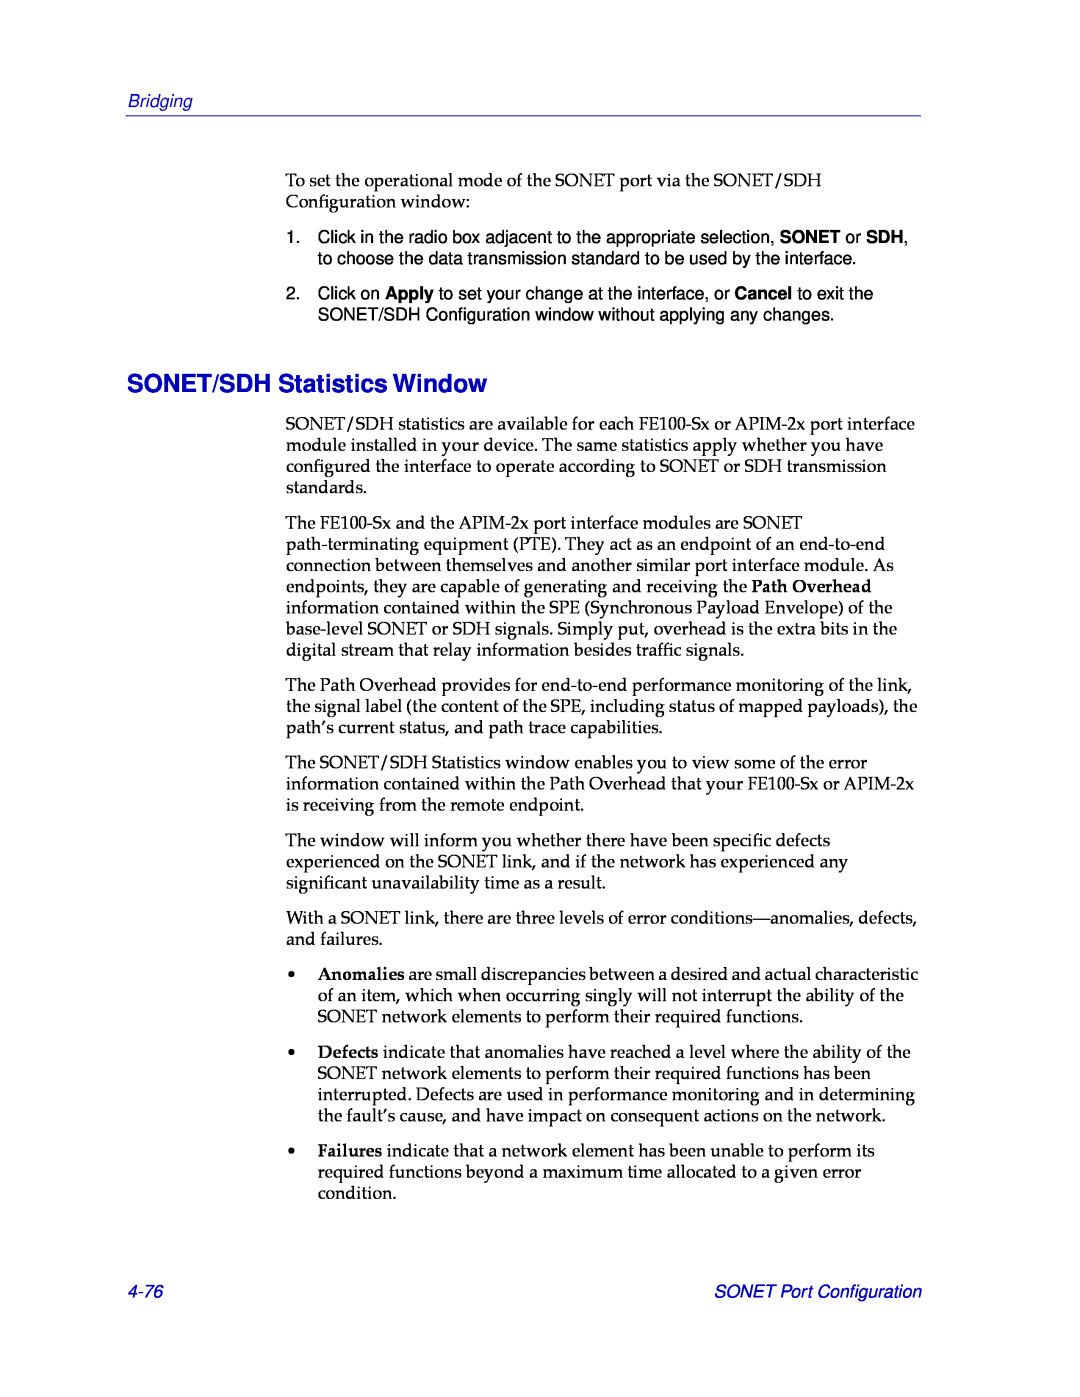 Cabletron Systems CSX400, CSX200 manual SONET/SDH Statistics Window, 4-76, Bridging, SONET Port Conﬁguration 